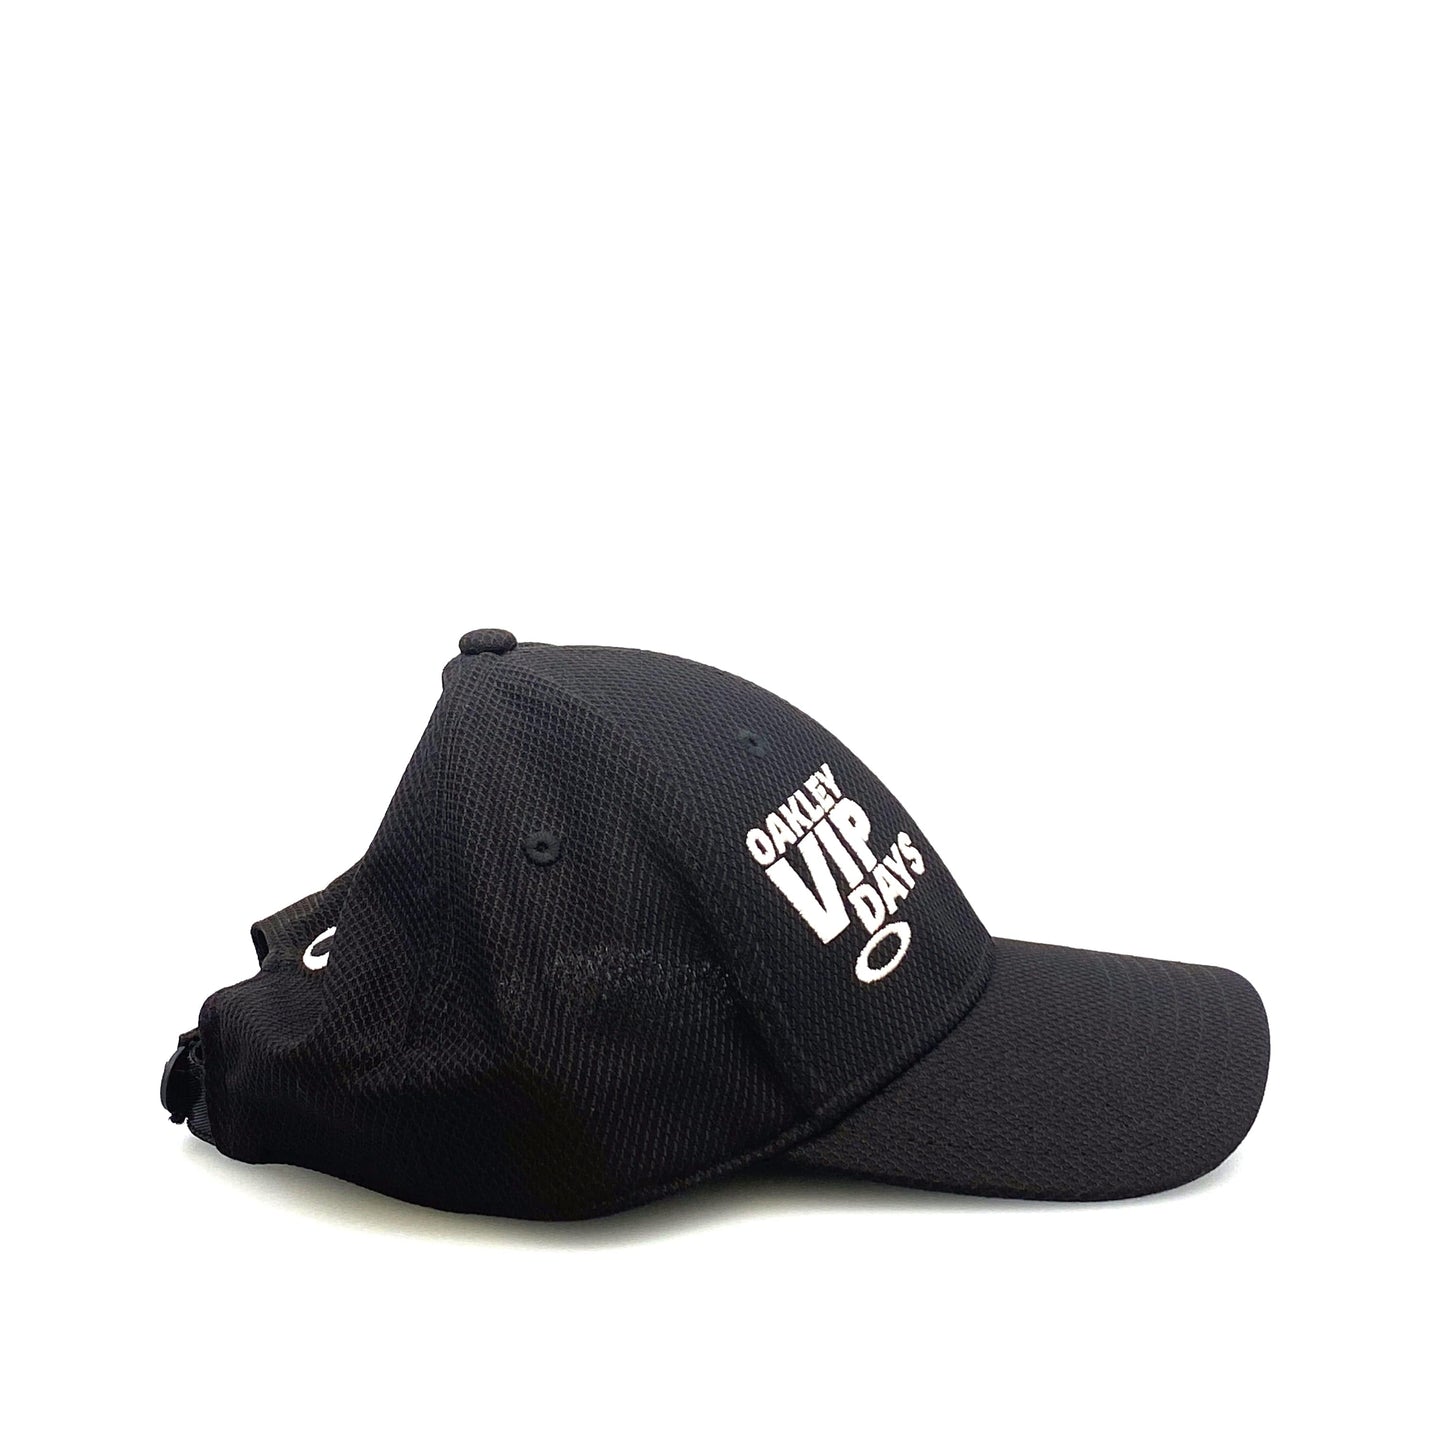 Oakley Mens Black Flat Bill Adjustable Baseball Hat “VIP Days” Limited Edition